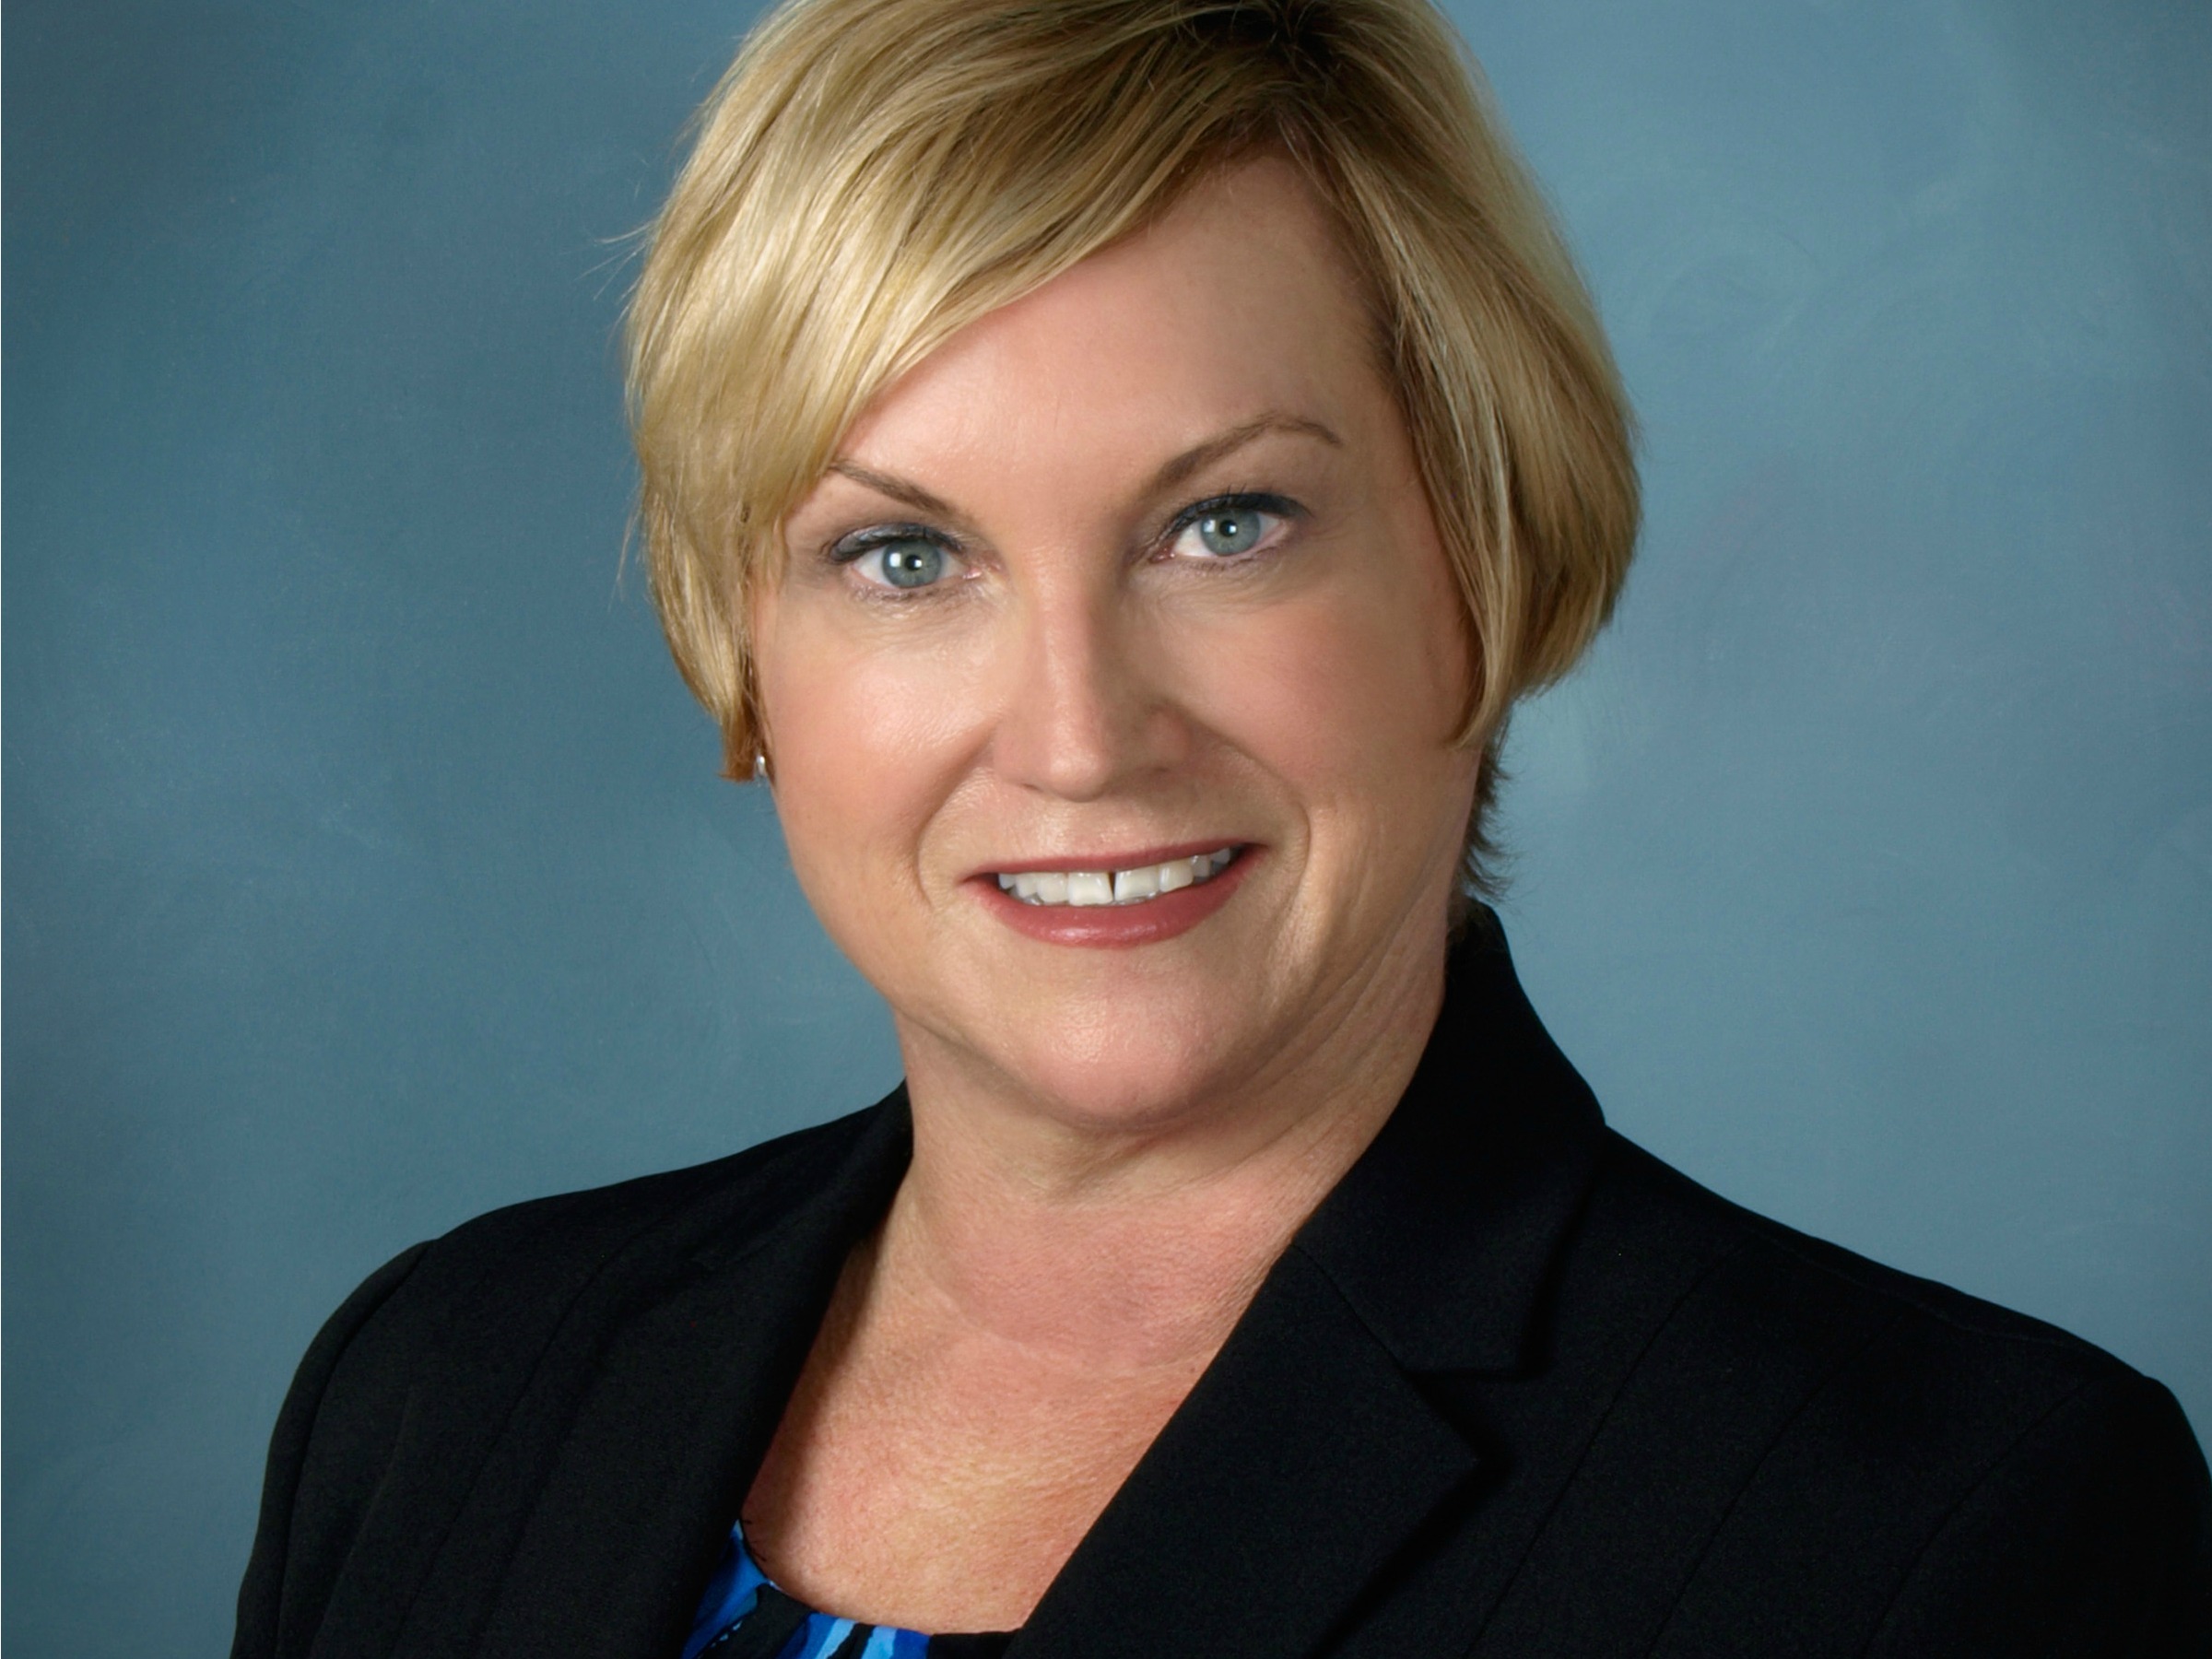 Dr. Carol Hansen, Ocean View superintendent